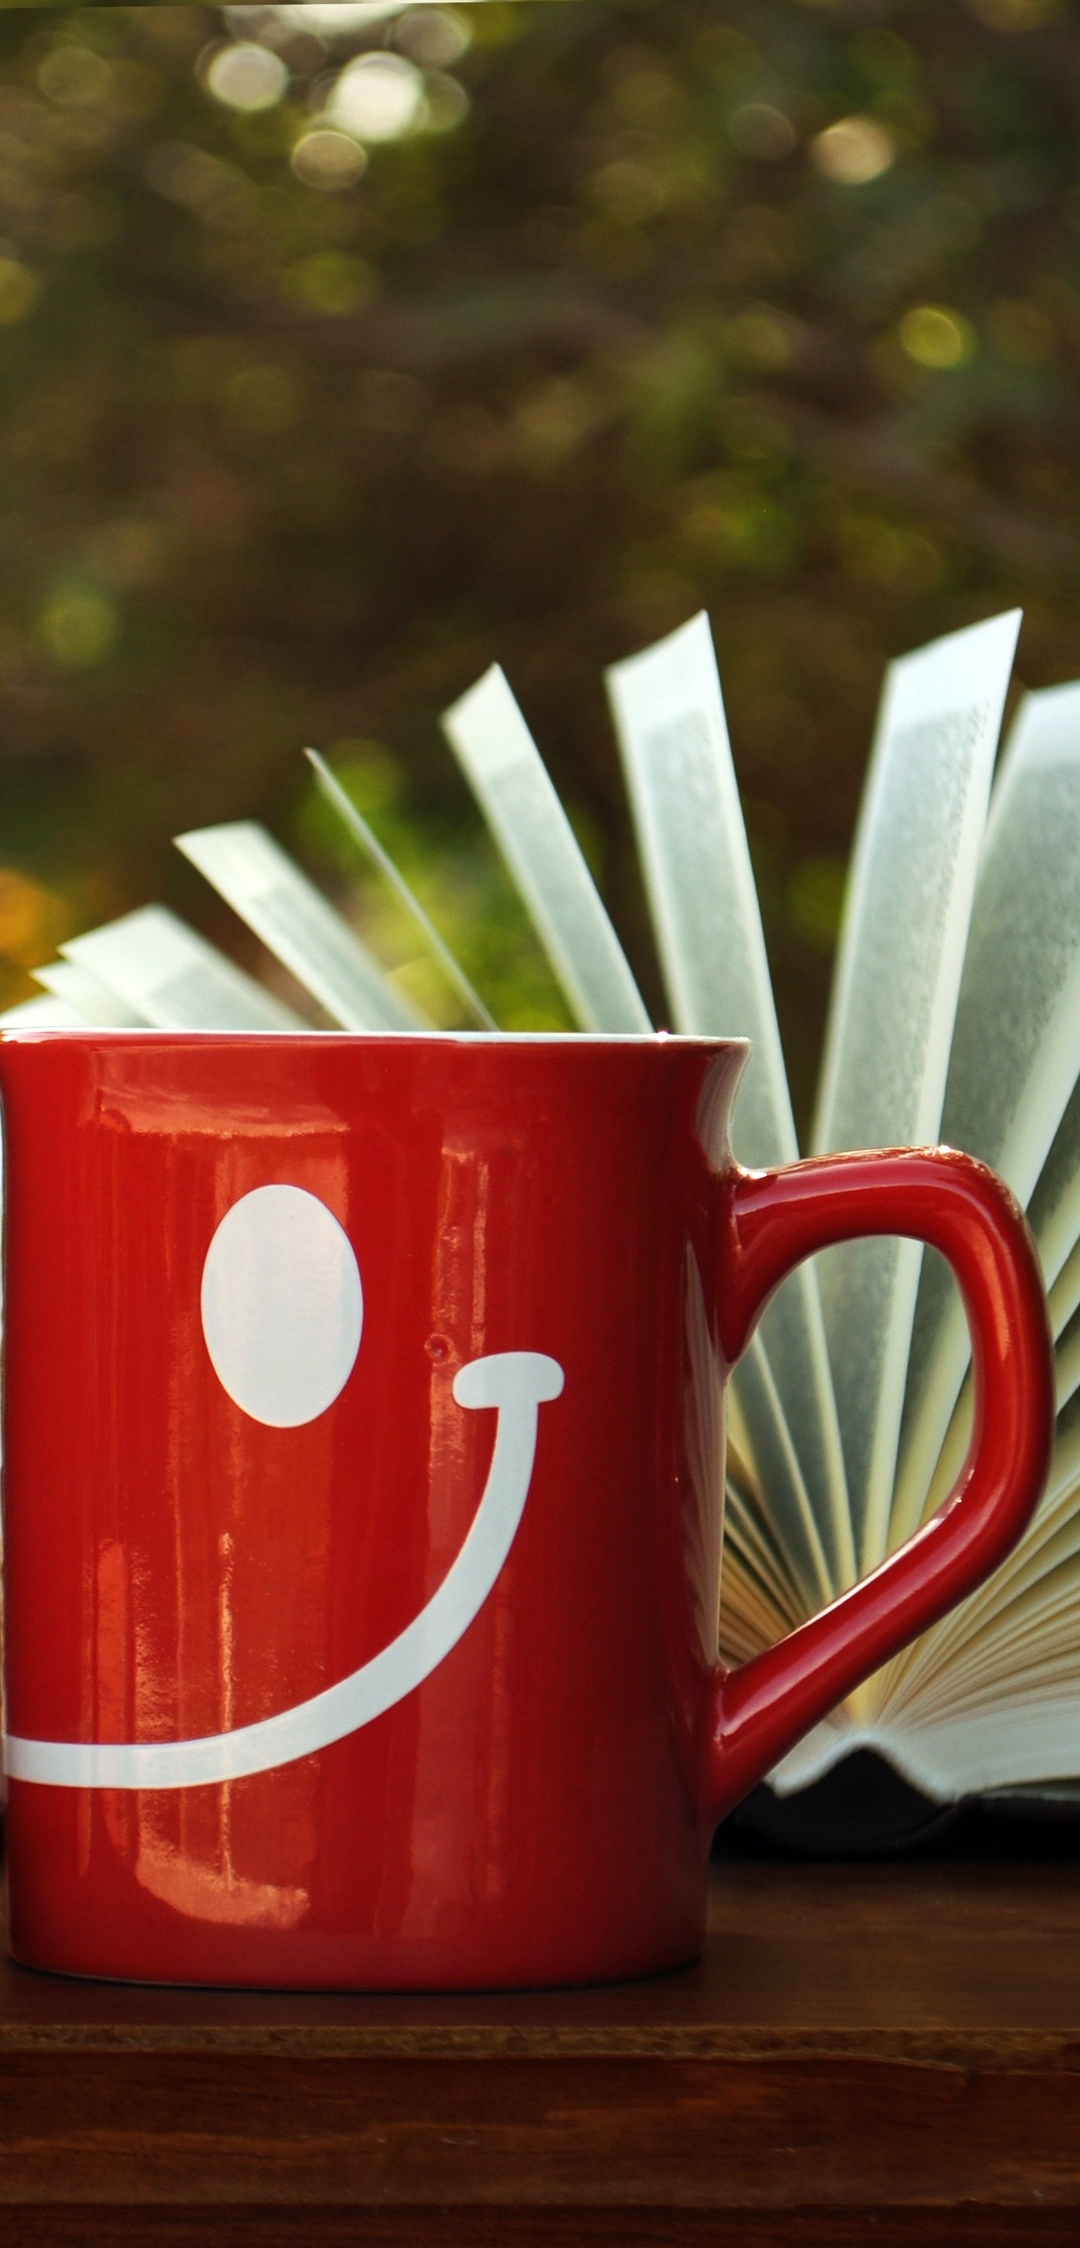 Image: Mugs, smile, mood, red, book, leaves